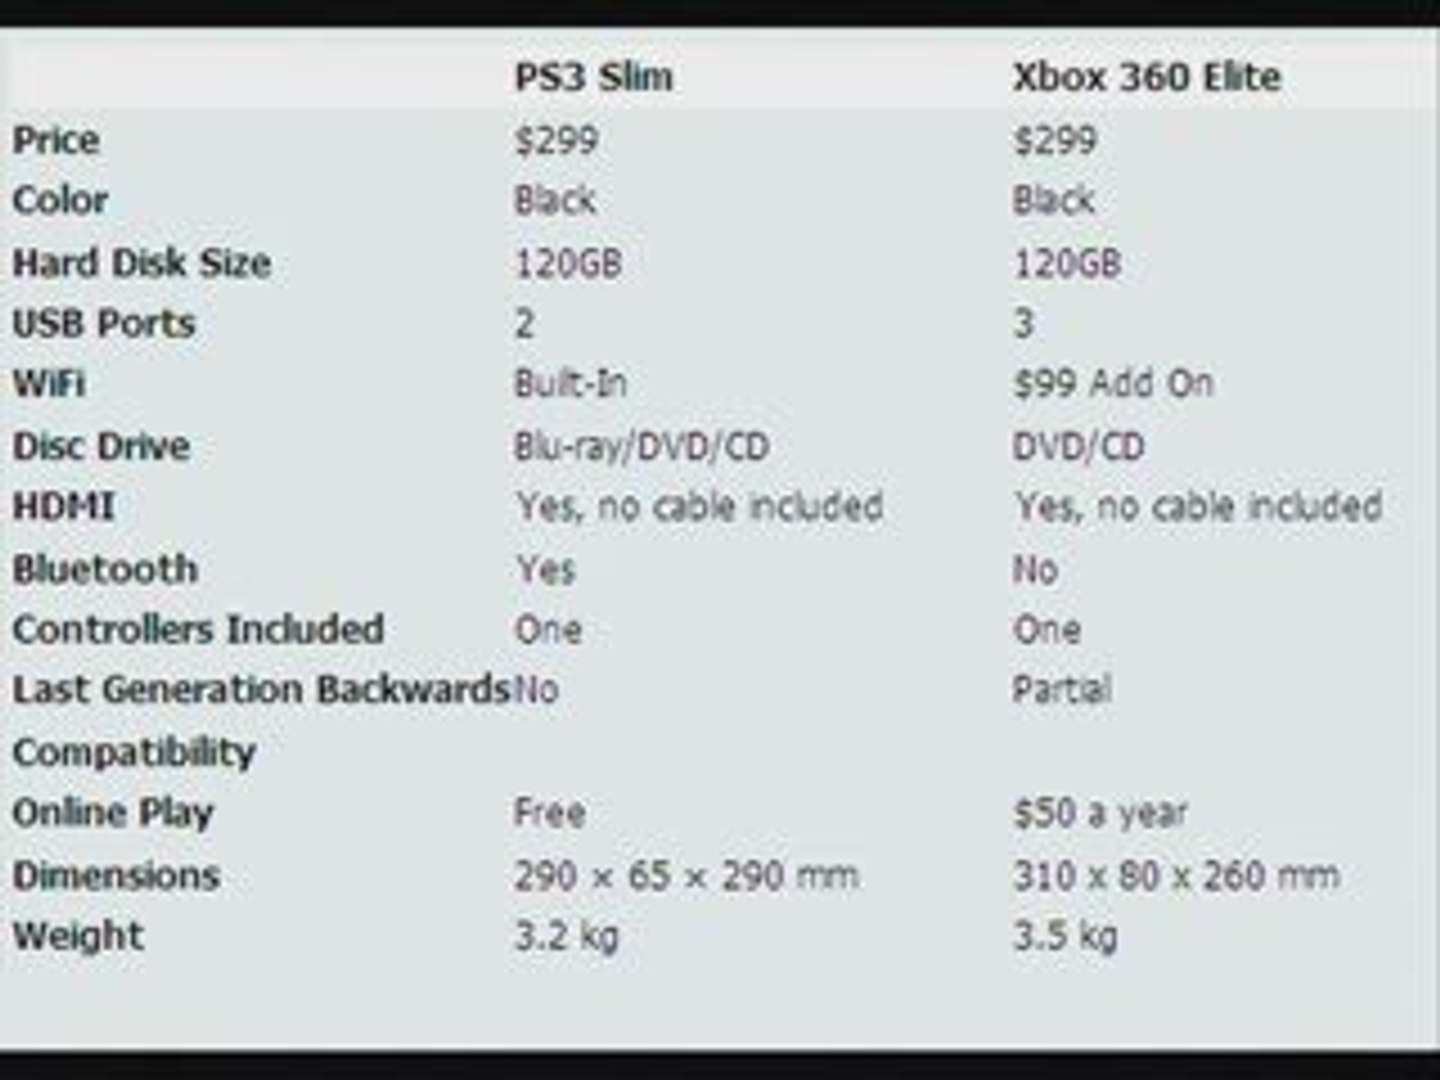 PS3 Slim vs Xbox 360 Comparison Video HD - video Dailymotion